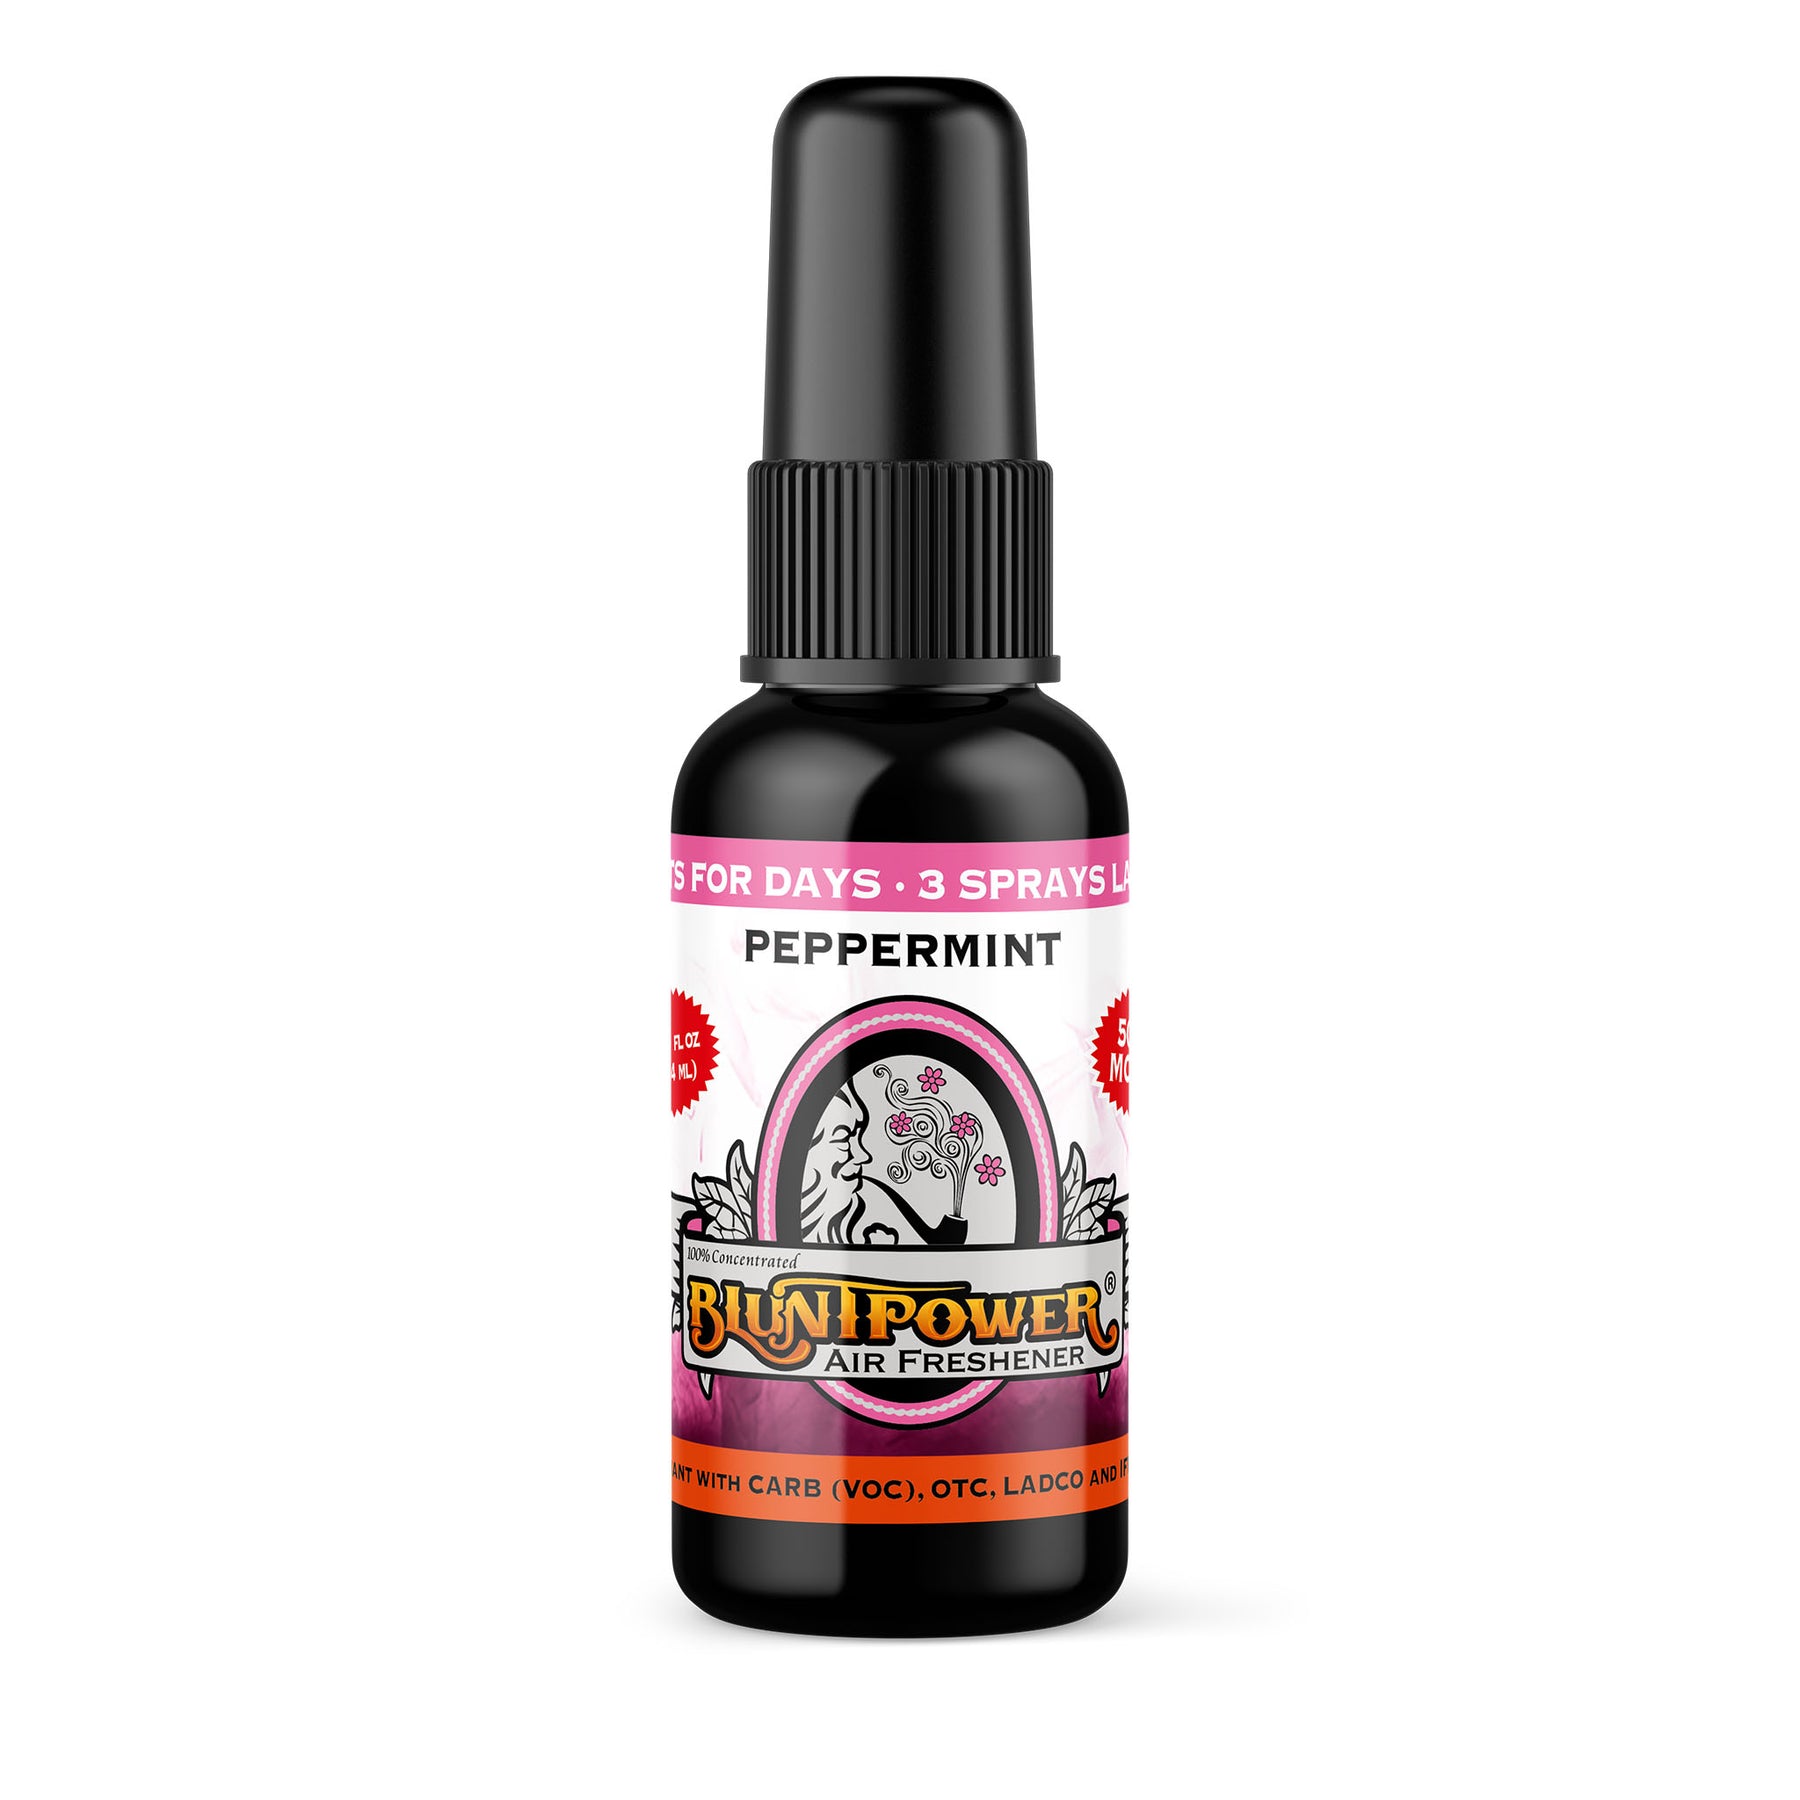 Peppermint Air Freshener Spray